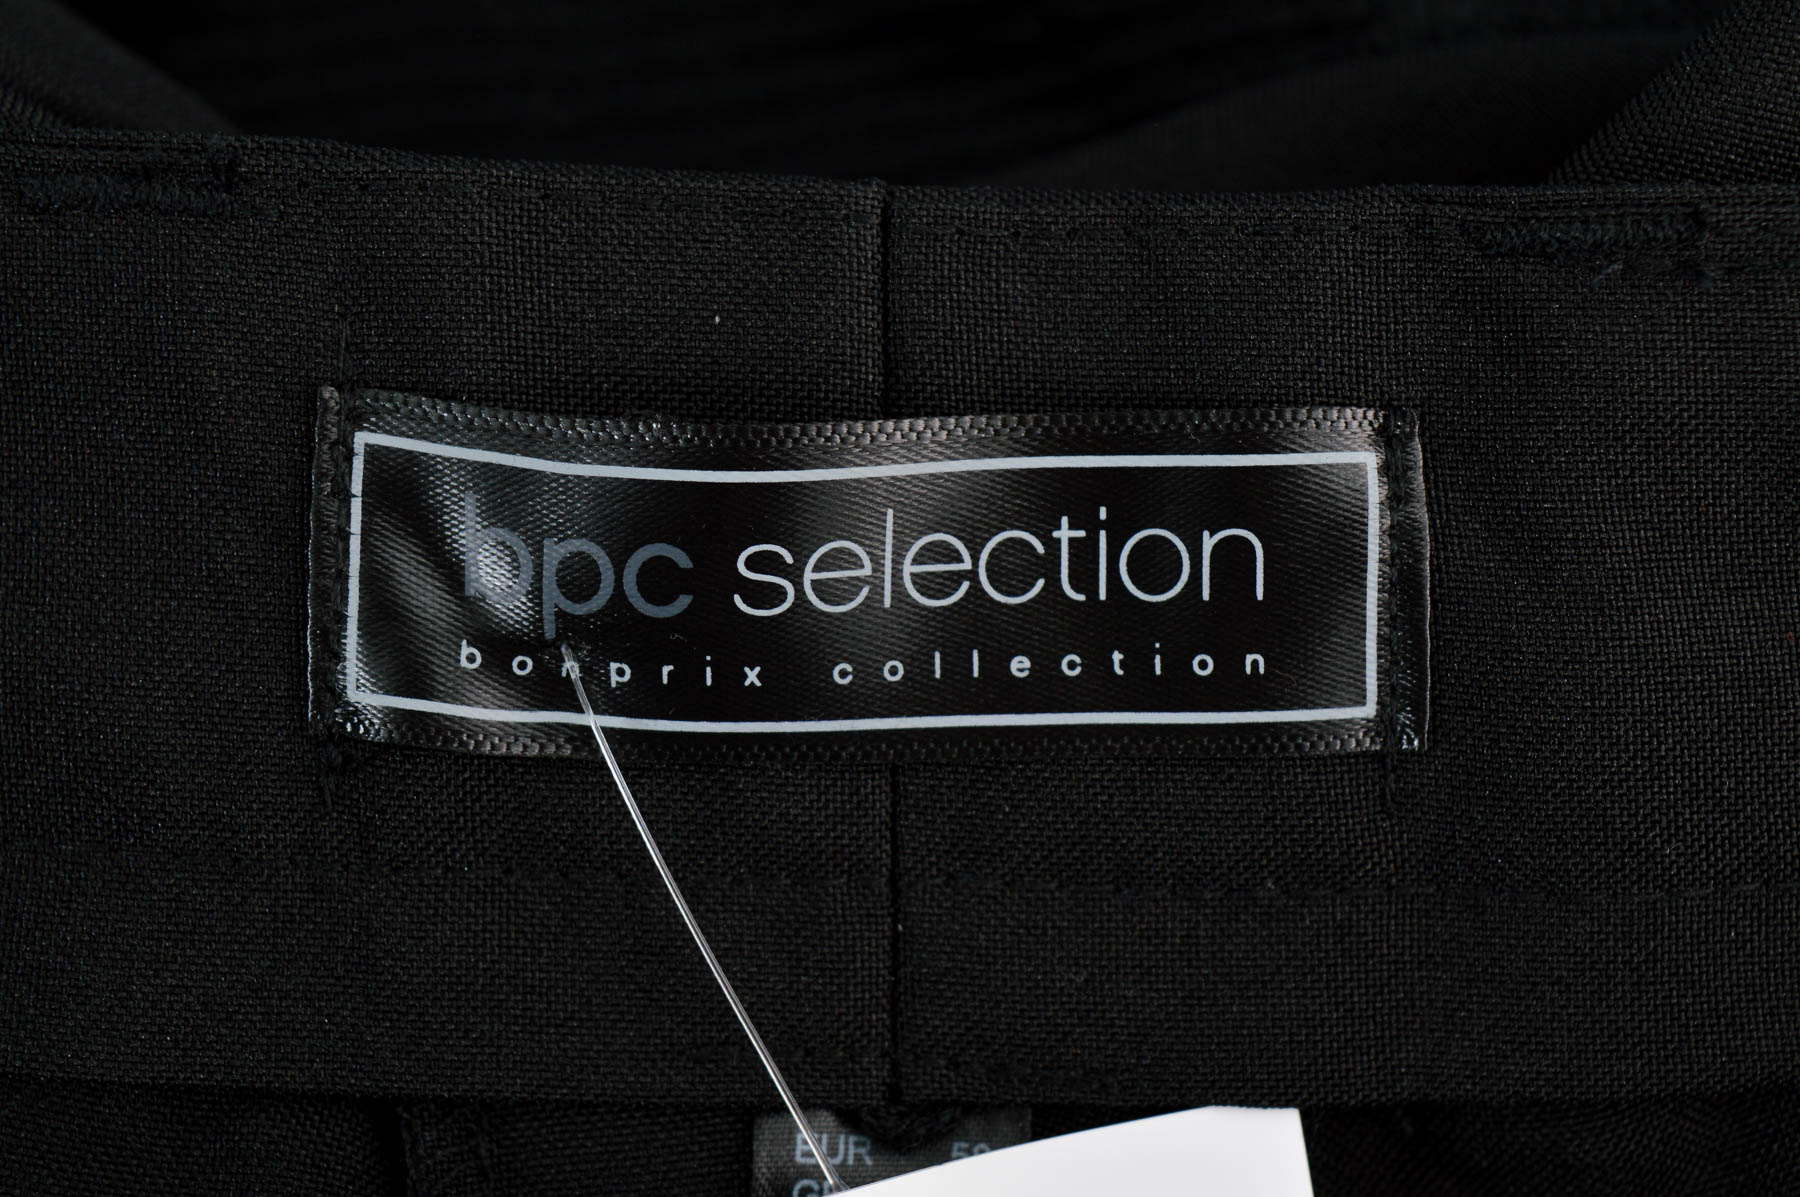 Męskie spodnie - Bpc selection bonprix collection - 2